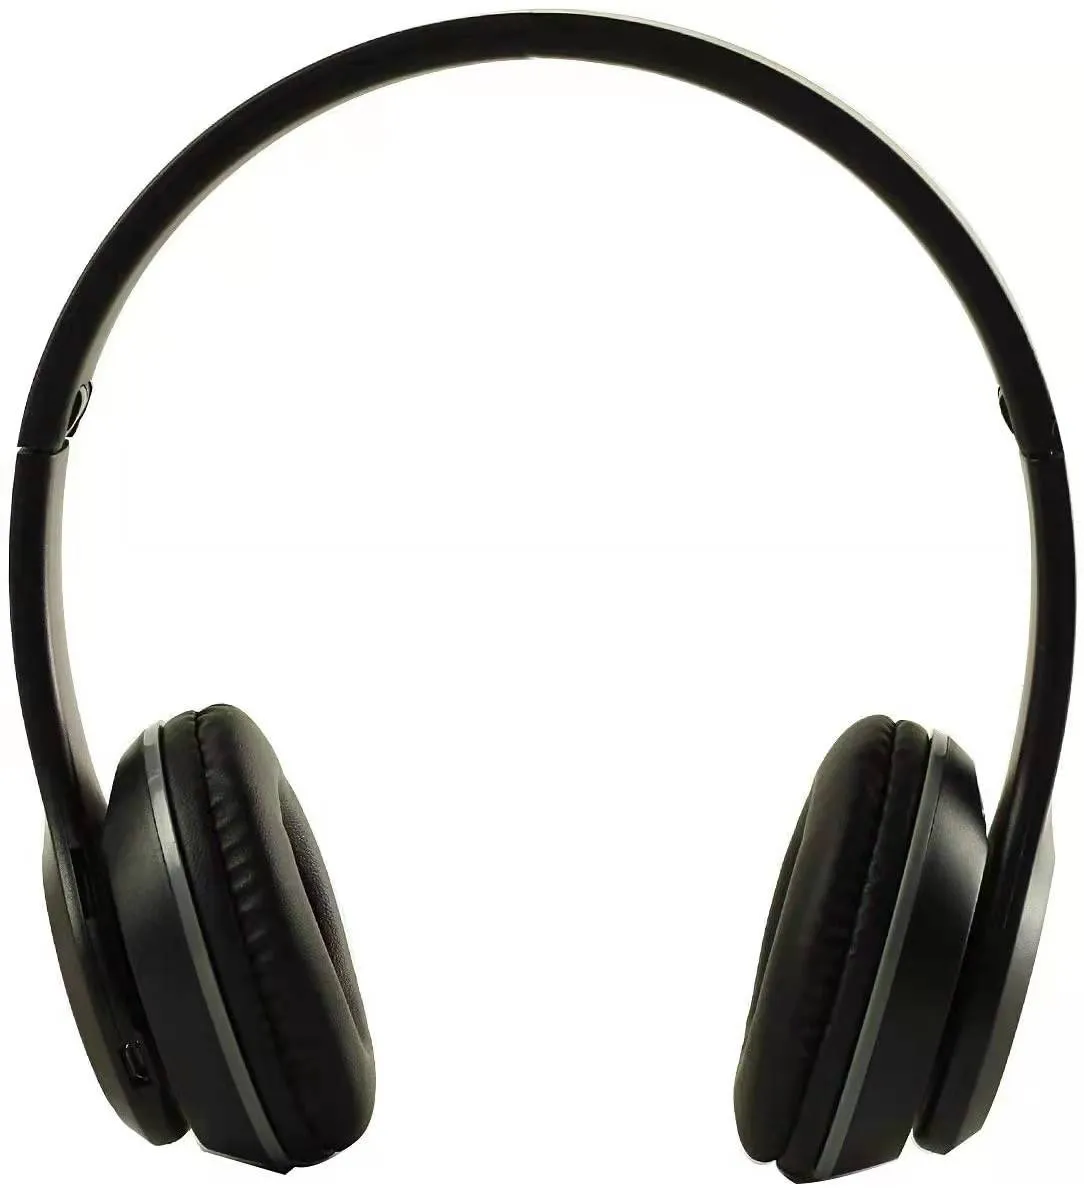  B460 Спортни безжични Bluetooth слушалки с микрофон и слот  2